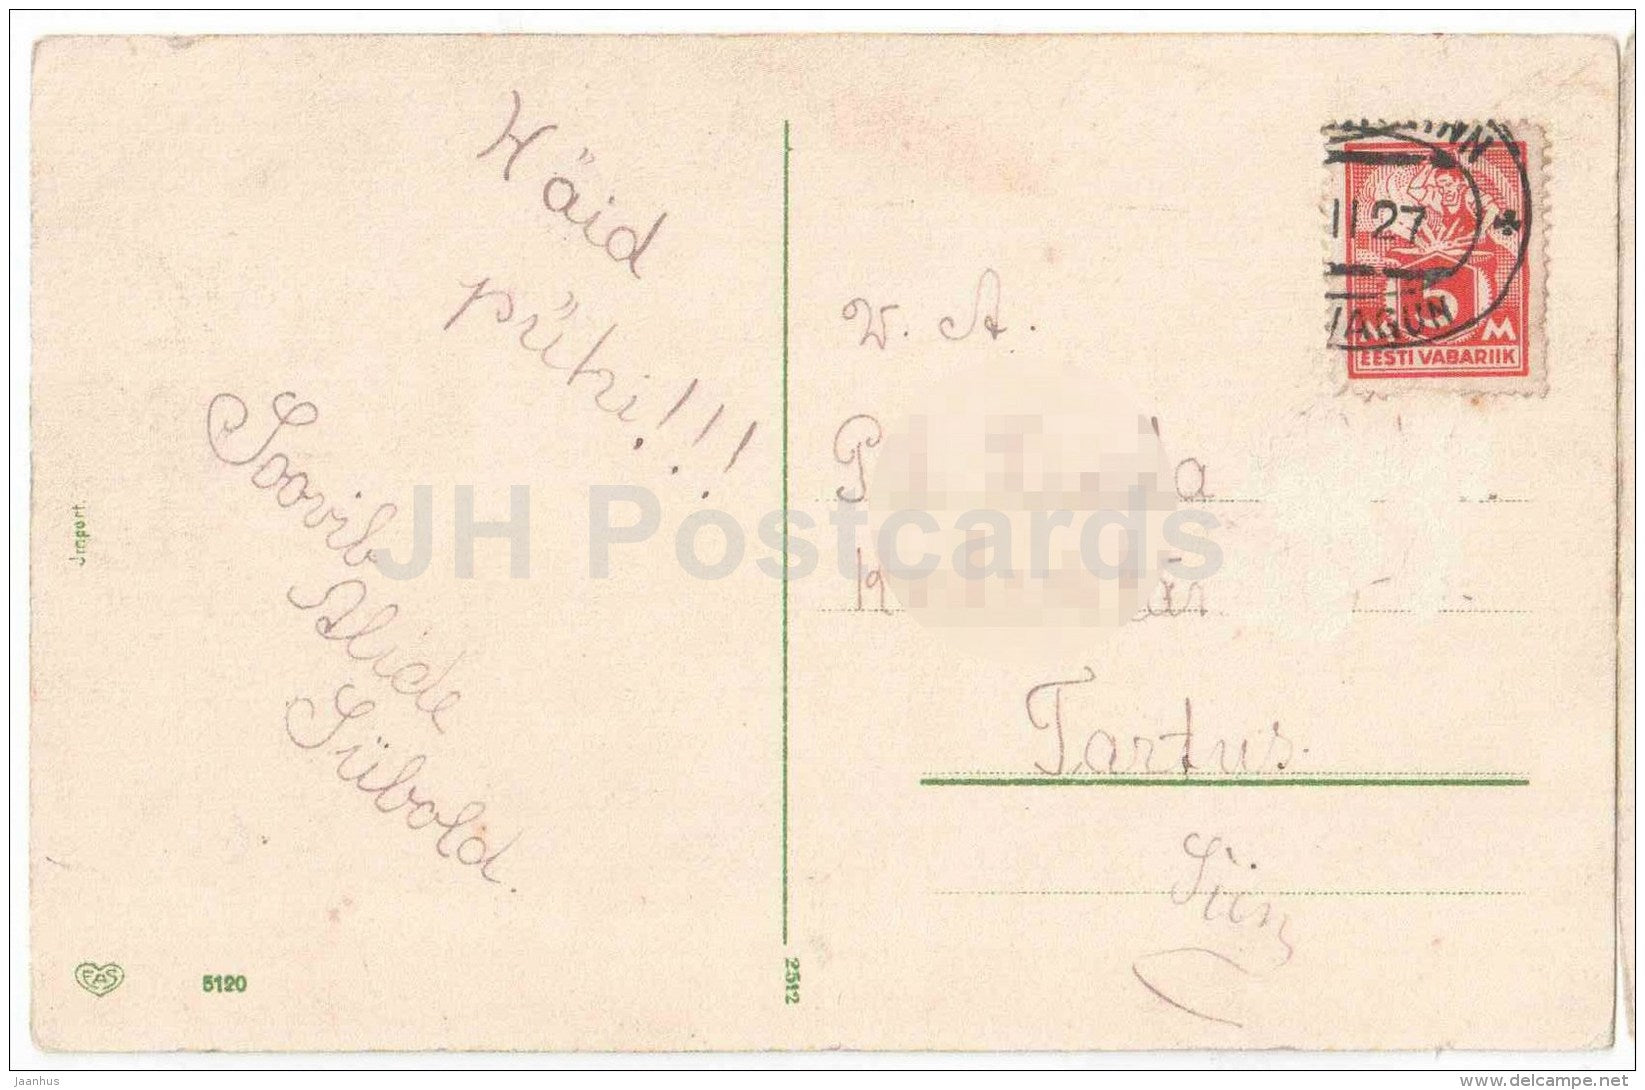 Easter greeting card - girl - hen - eggs - chicken - EAS 5120 - circulated in Estonia Tallinn 1927 - JH Postcards